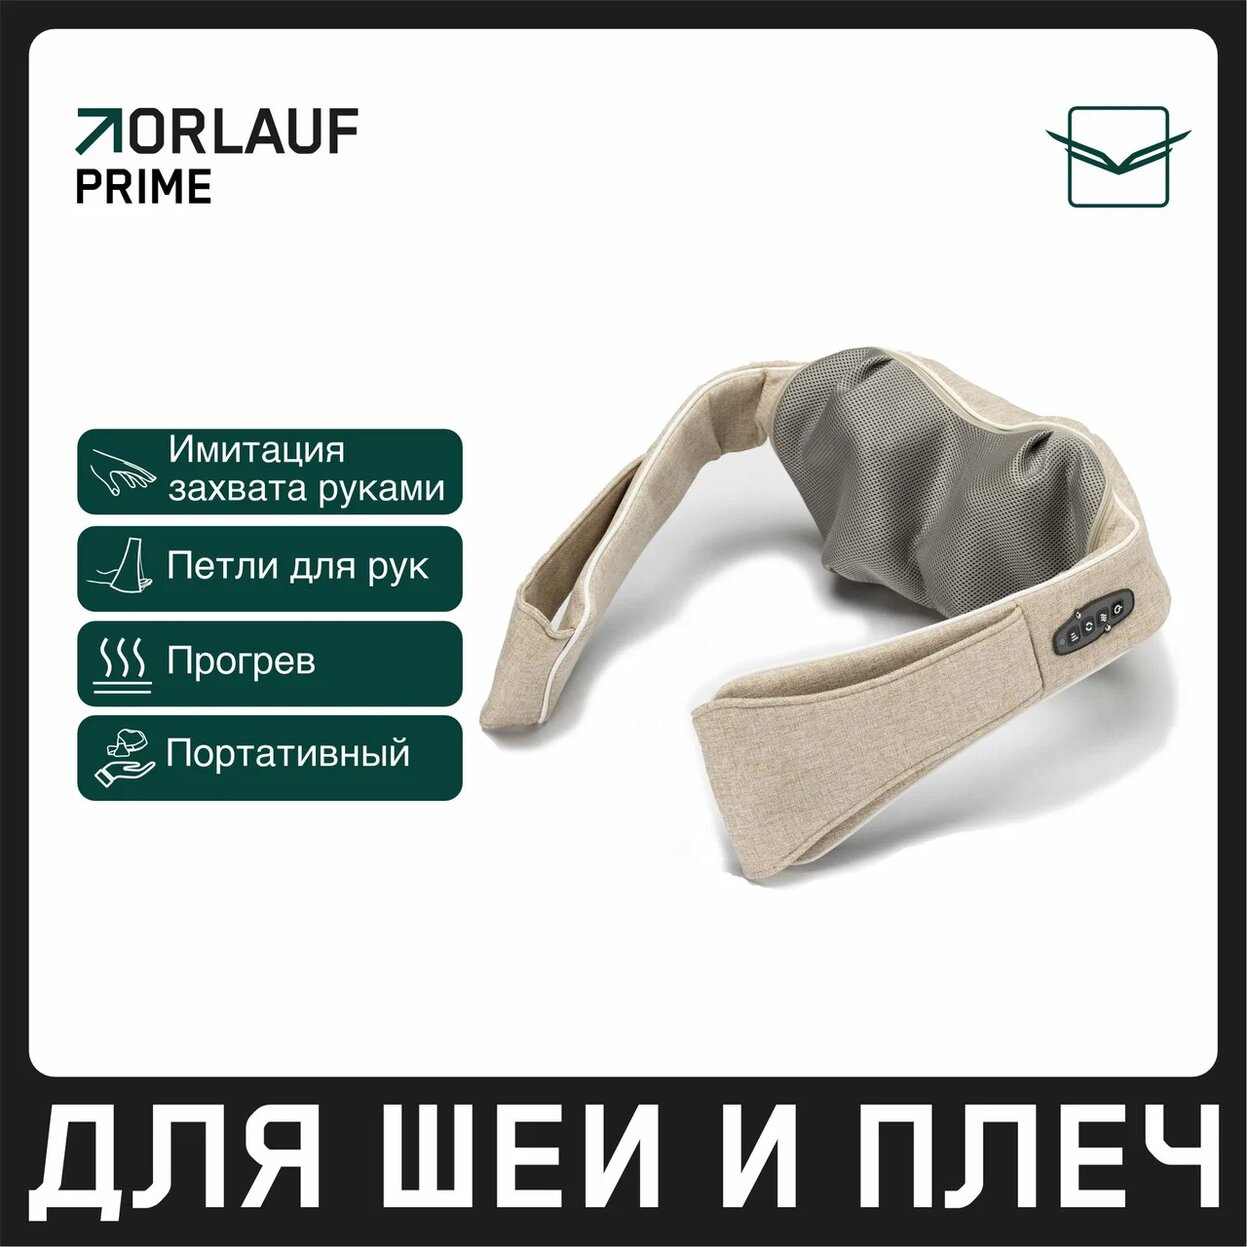 Orlauf Prime из каталога портативных массажеров в Омске по цене 11900 ₽